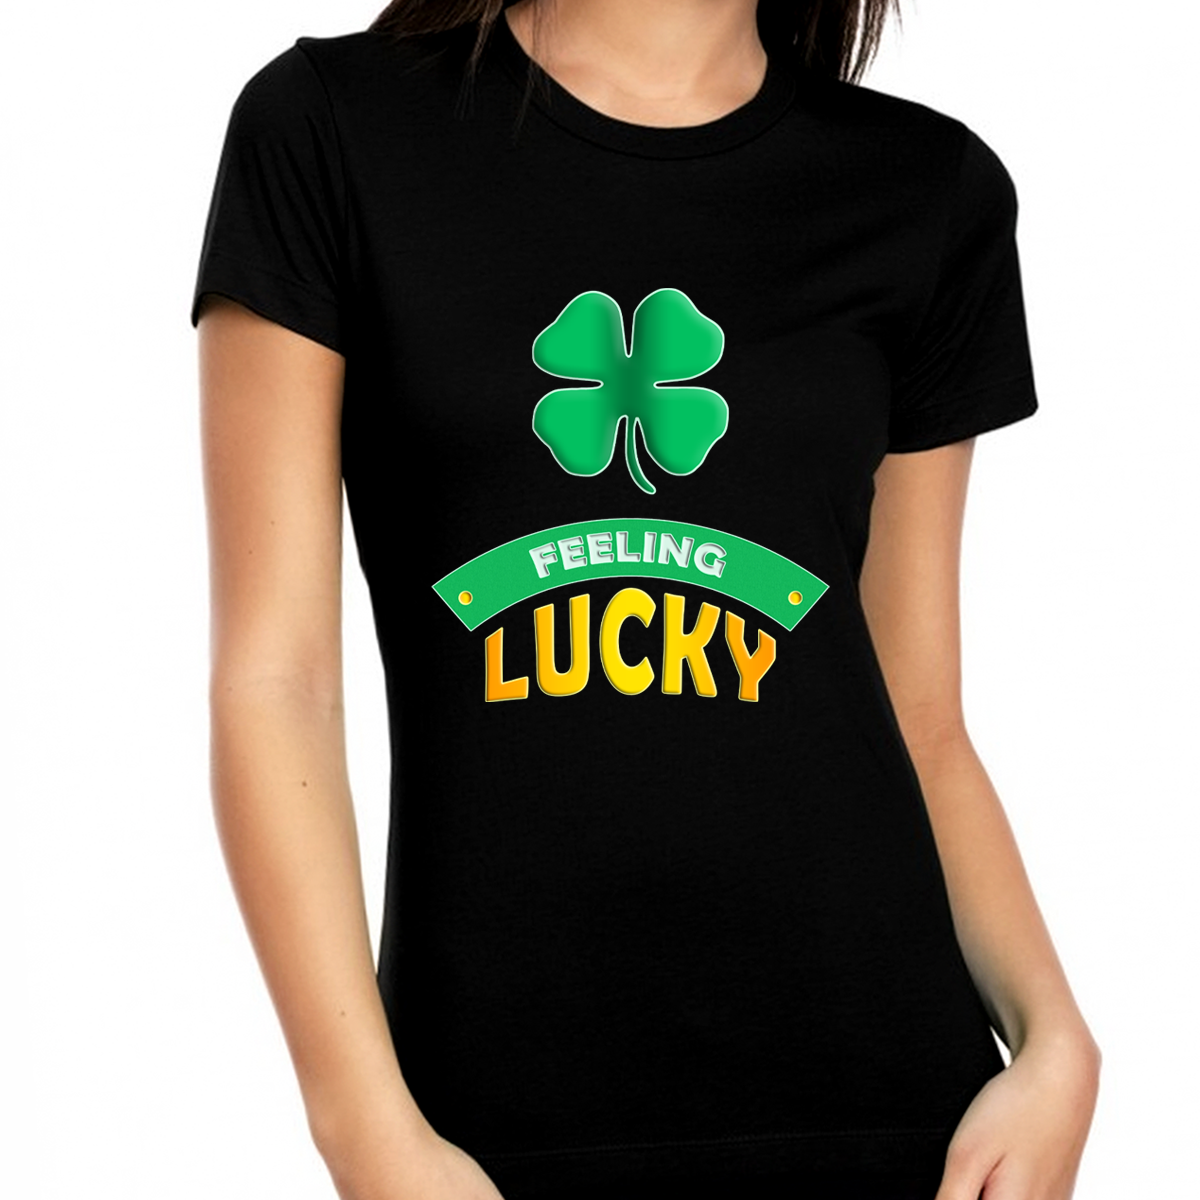 St Pattys Day Shirt Irish Shirt Shamrock Shirt Lucky Shirt St Patricks Day Shirt Women St Patricks Day Tee Saint Patricks Day Shirt